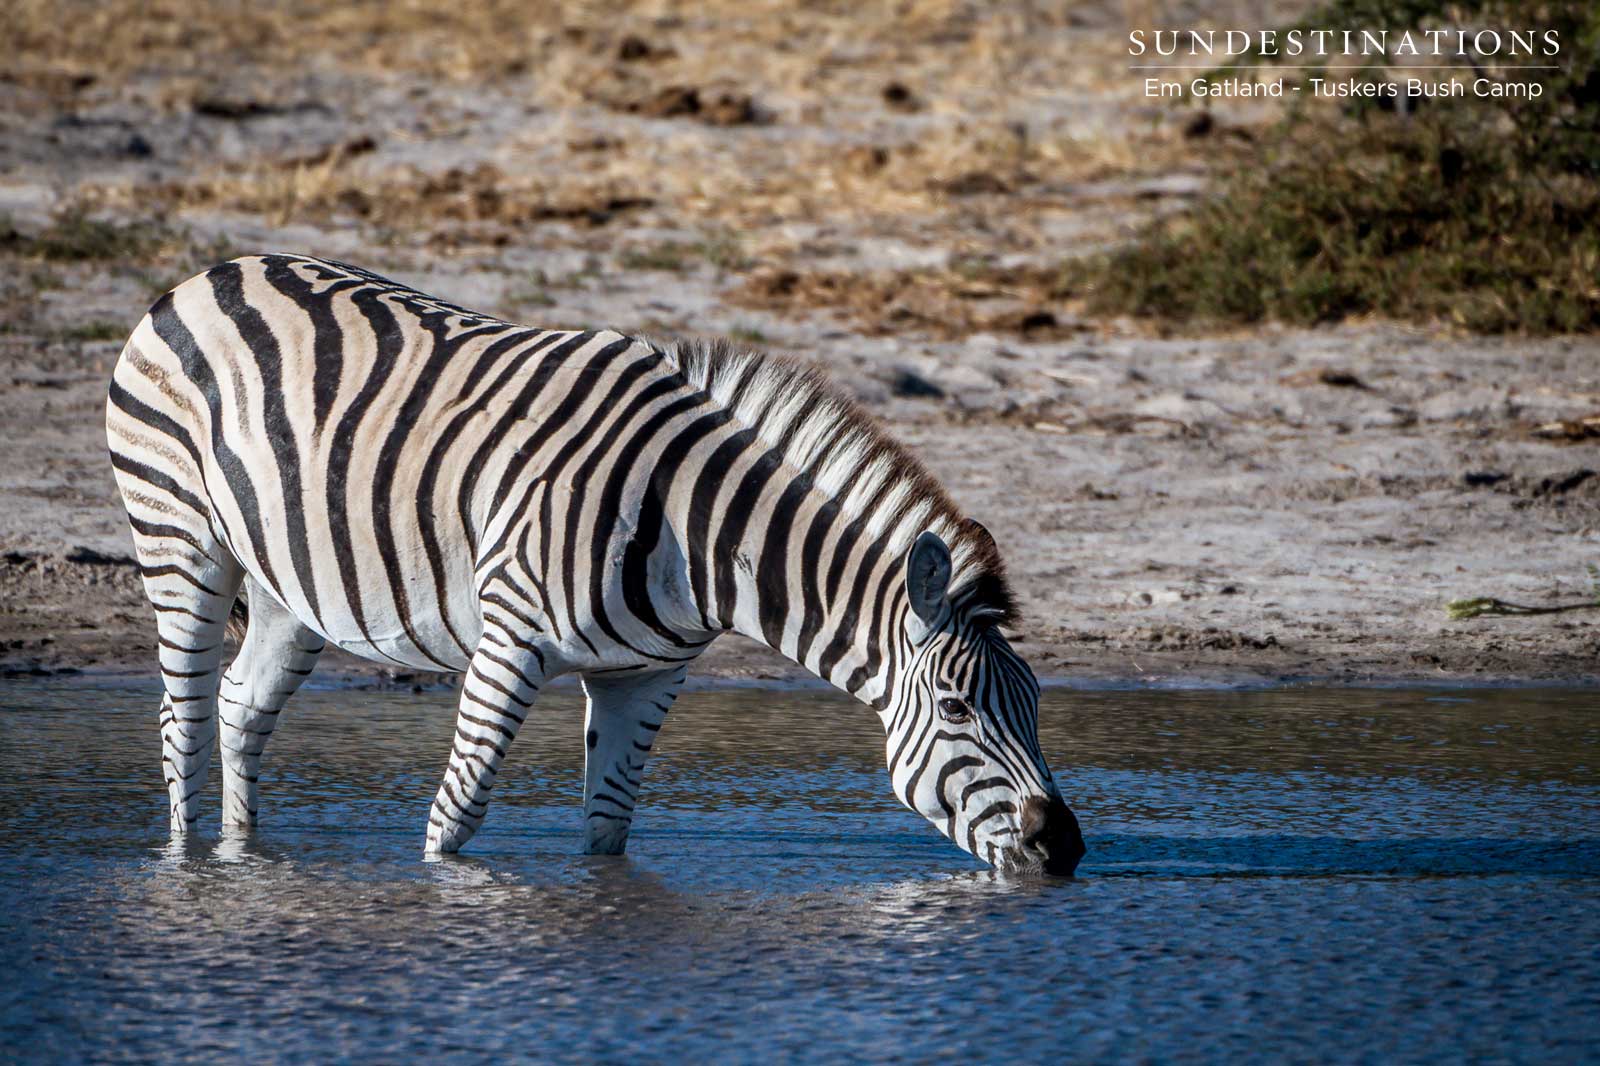 Zebras at Tuskers Bush Camp